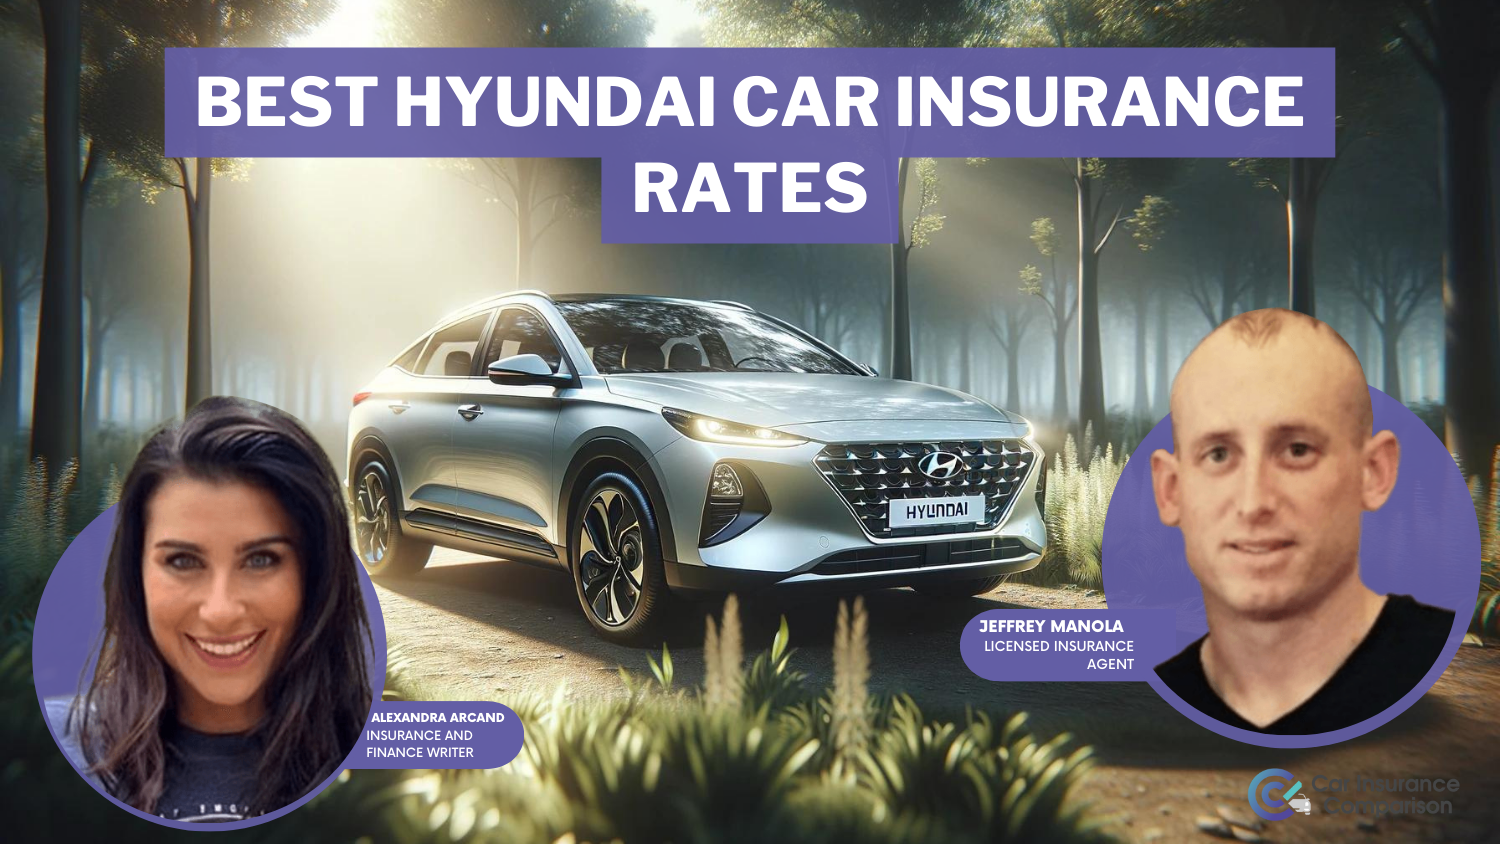 Best Hyundai Car Insurance Rates: State Farm, USAA, and Liberty Mutual